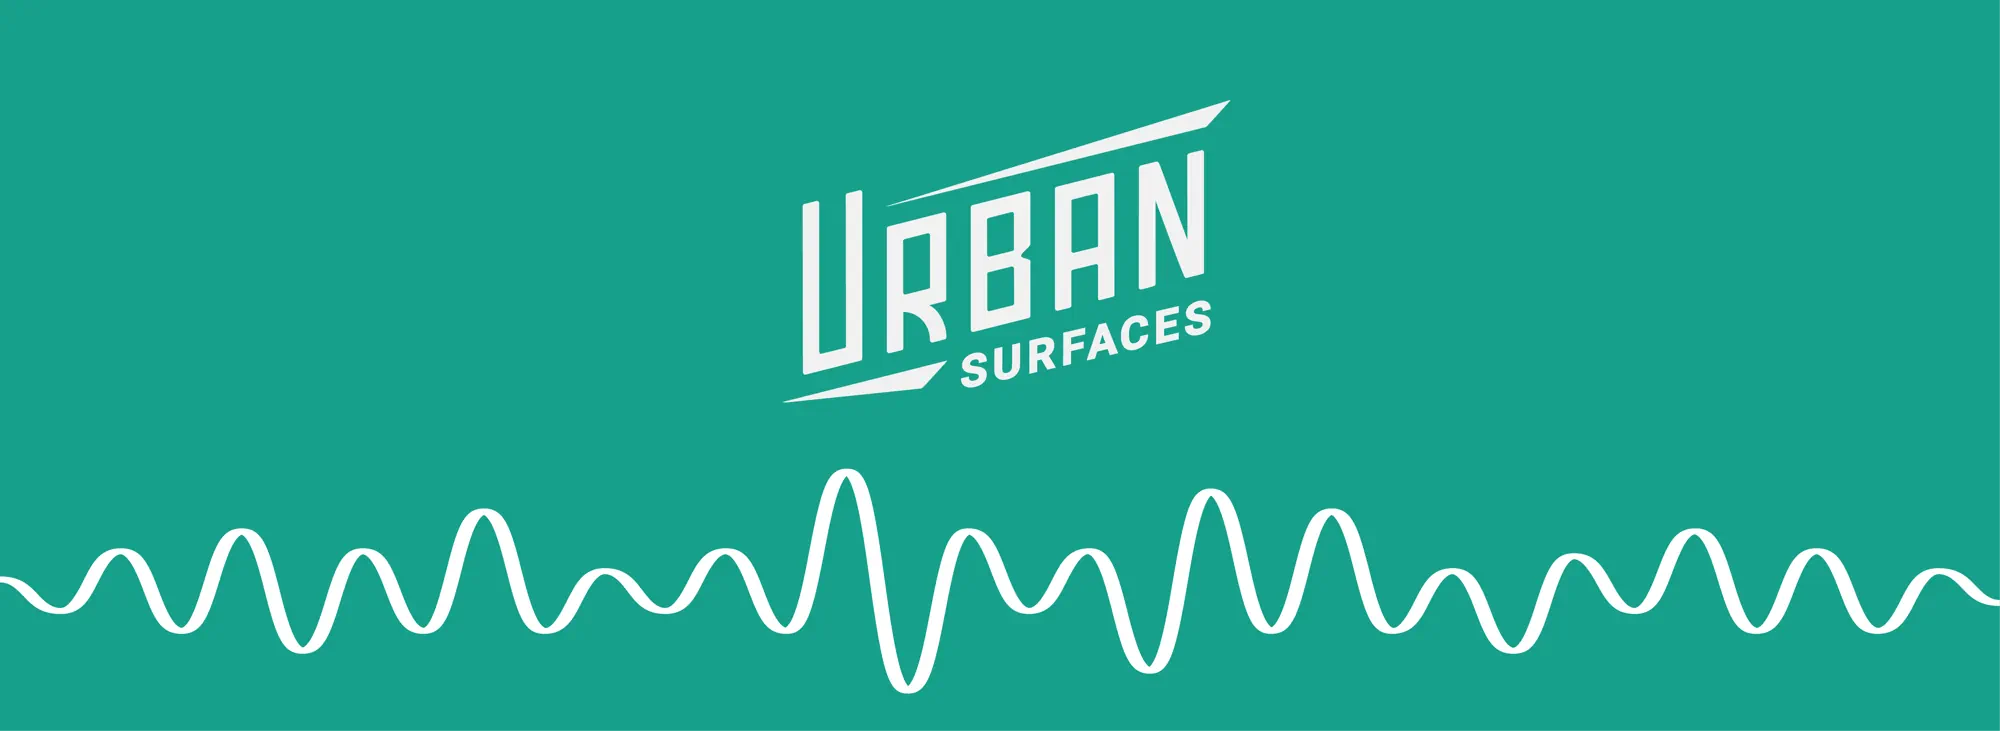 Urban Surfaces logo with audio wave diagram